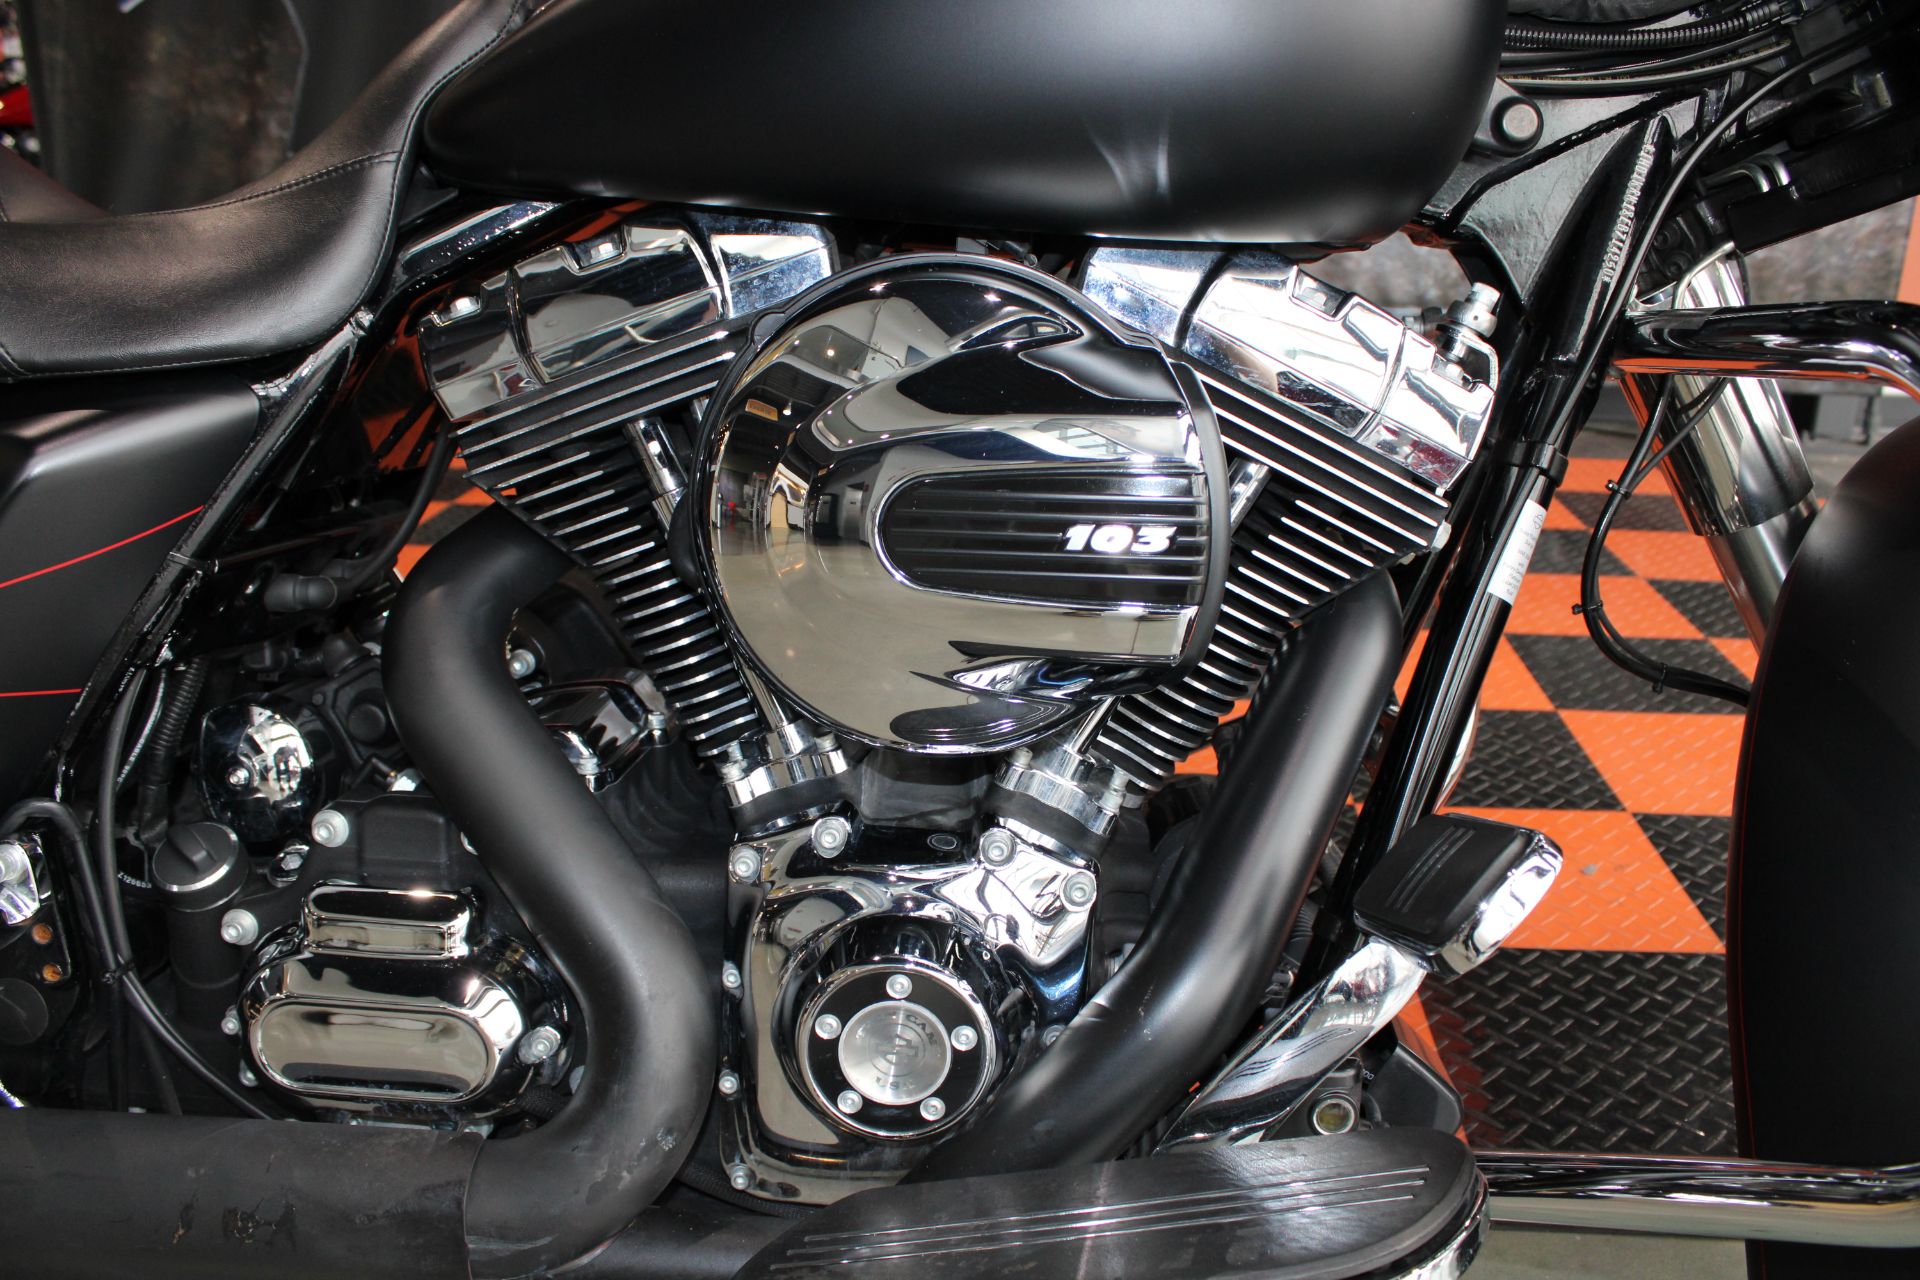 2014 Harley-Davidson Street Glide® Special in Shorewood, Illinois - Photo 5